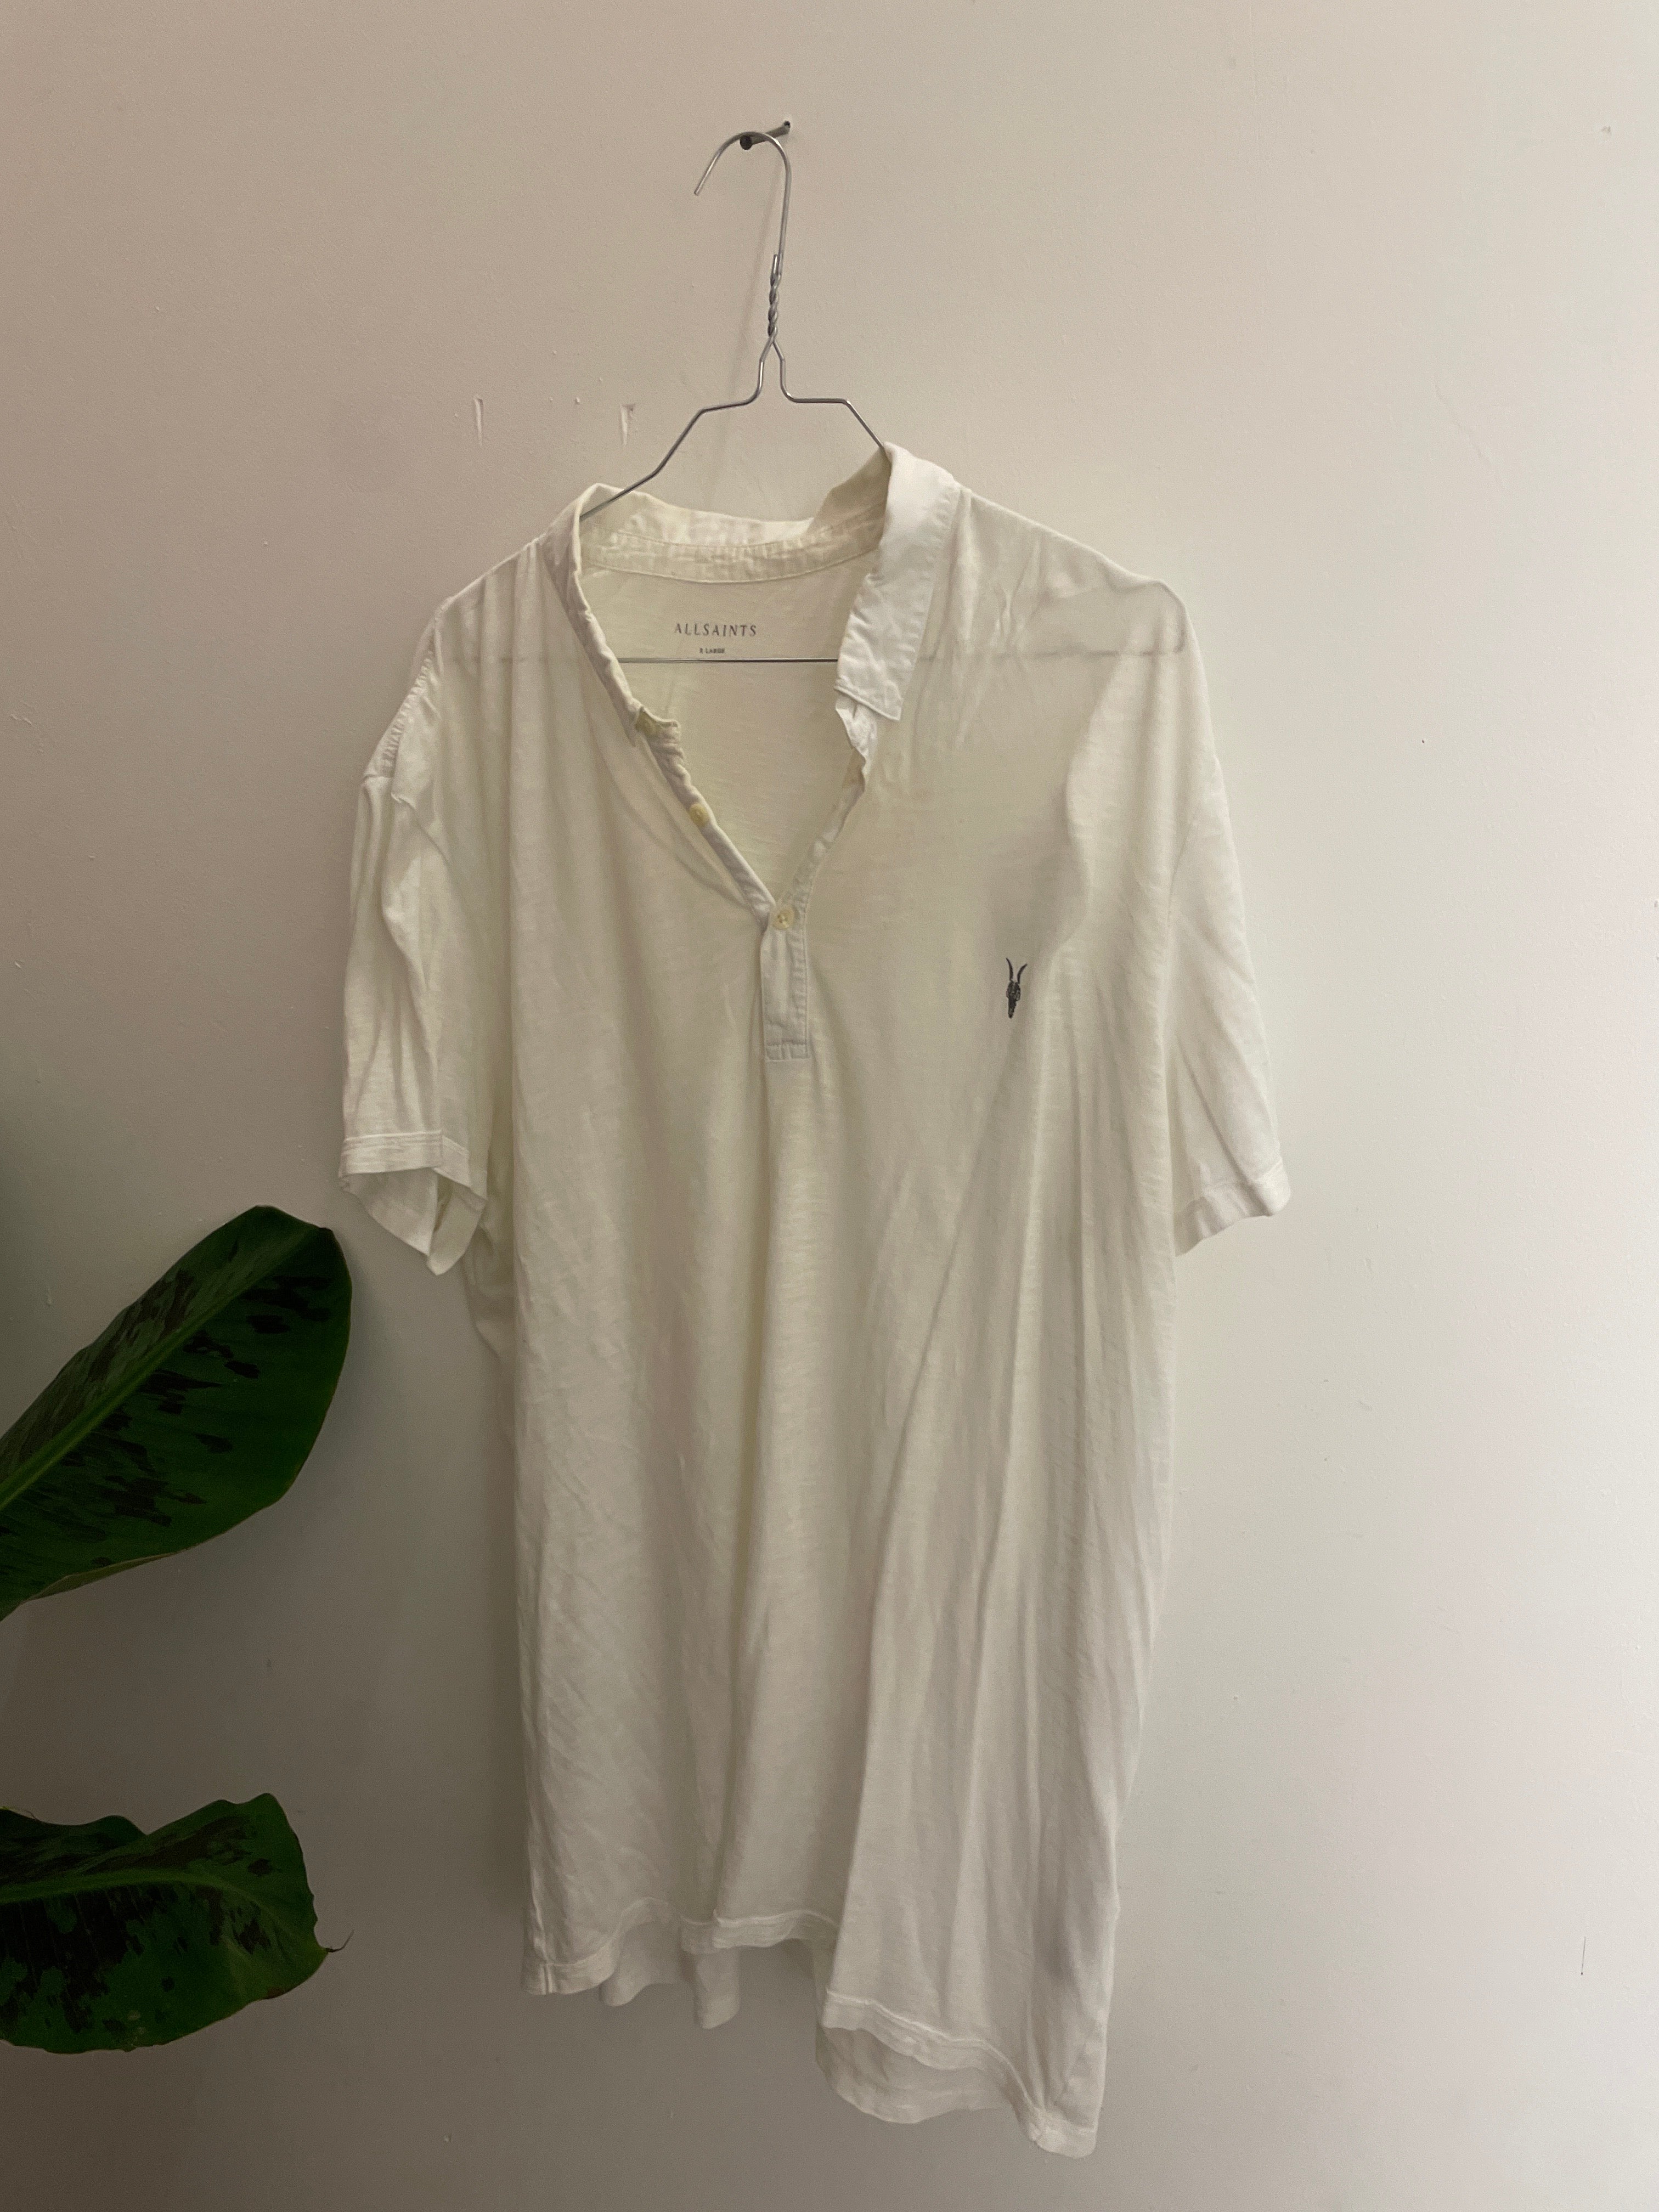 Vintage Allsaint white mens polo shirt size XL